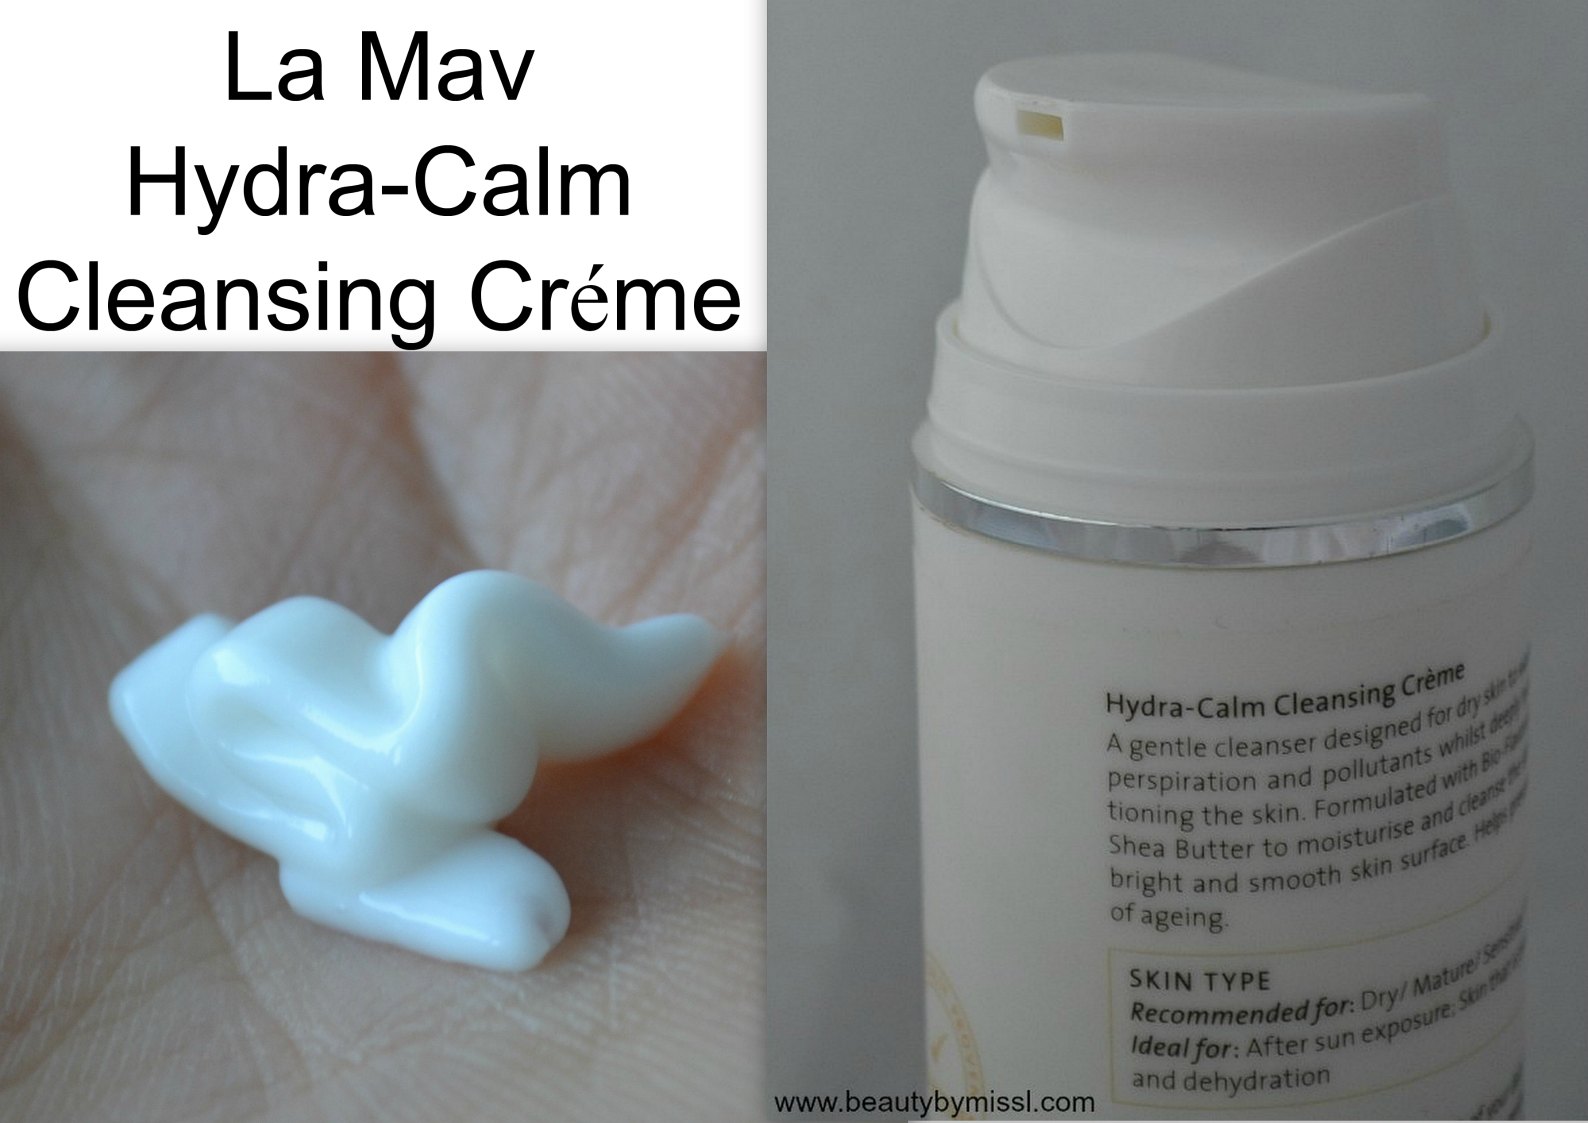 La Mav Hydra Calm Cleansing Créme